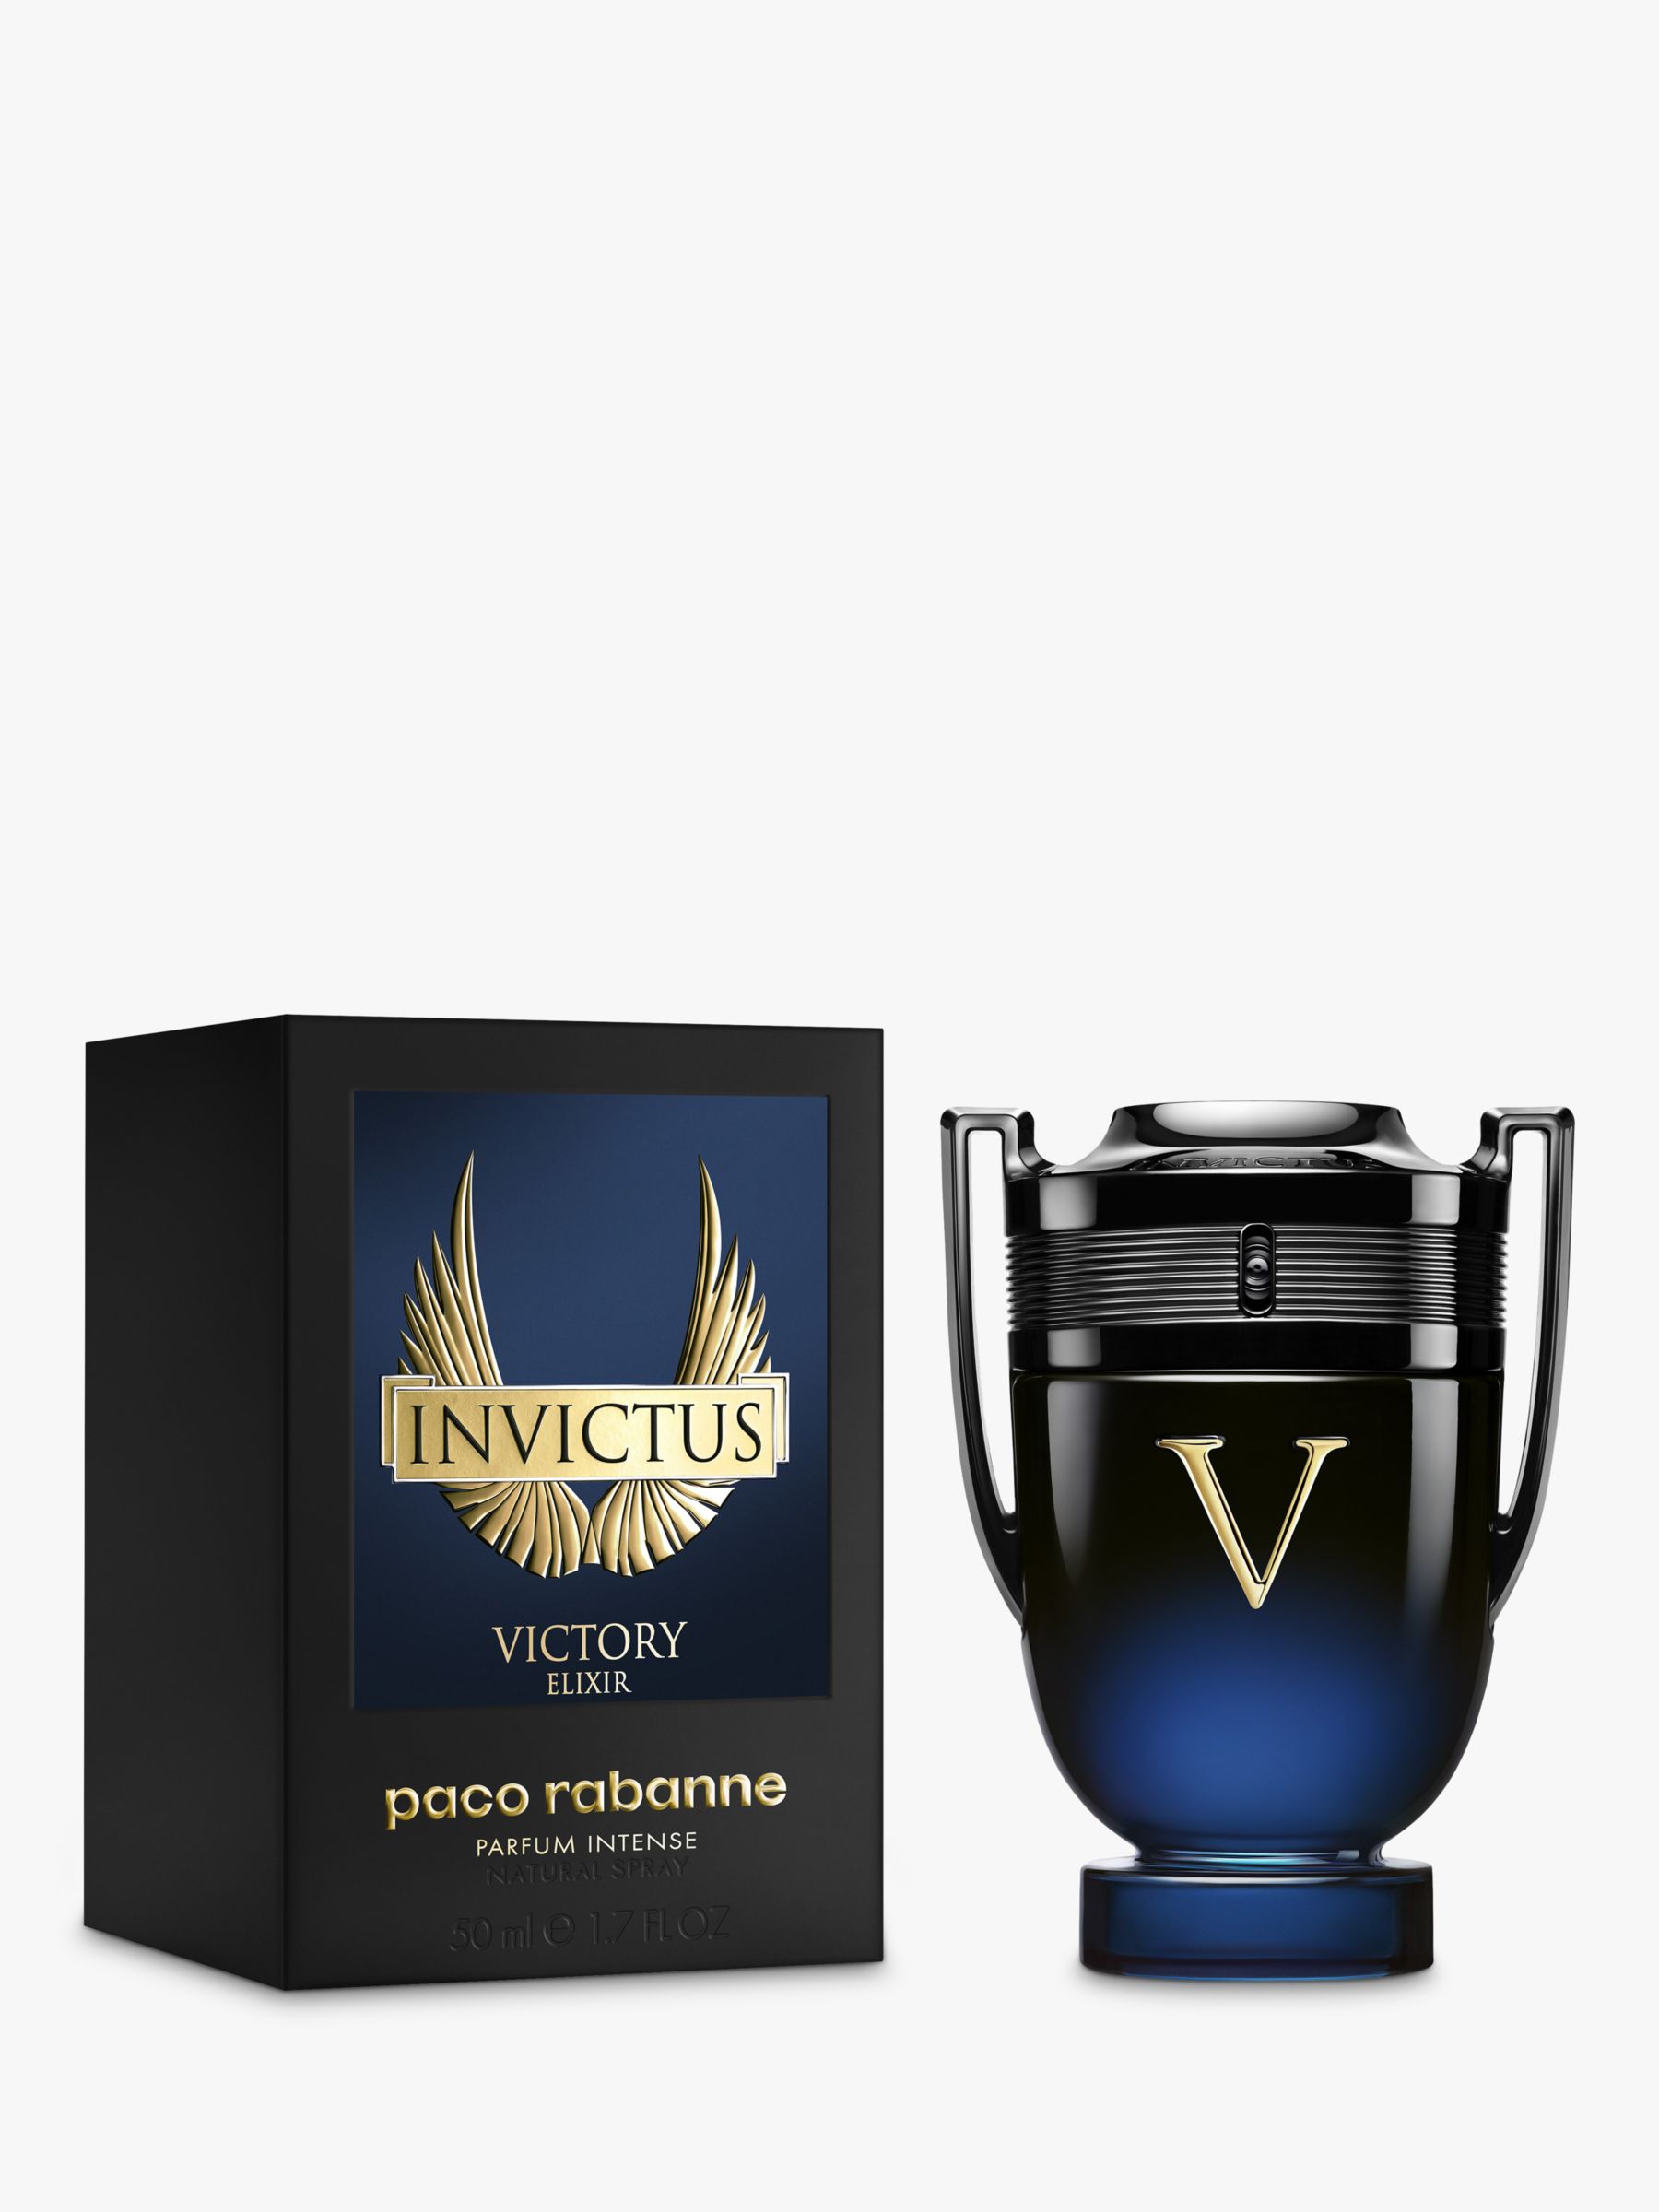 Rabanne Invictus Victory Elixir Parfum Intense, 50ml at John Lewis ...